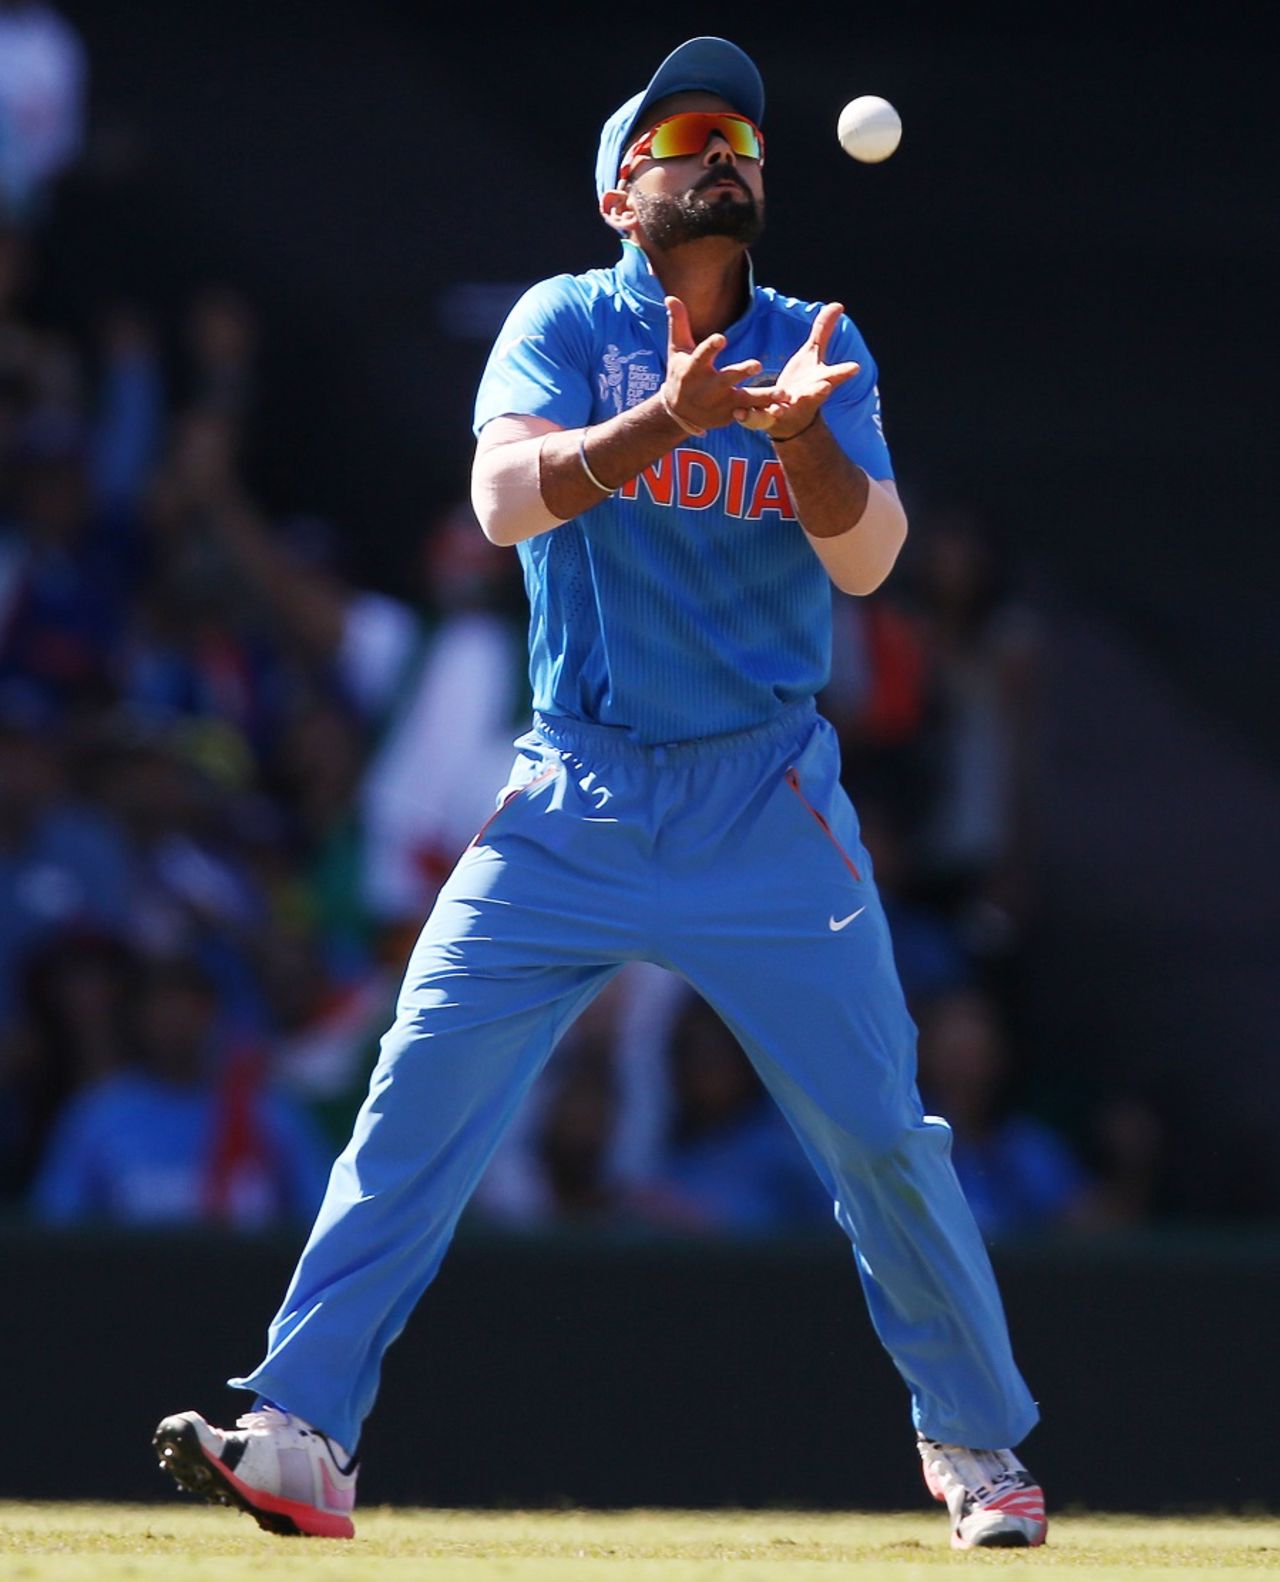 Virat Kohli settles under a mis-hit from David Warner, Australia v India, World Cup 2015, 2nd semi-final, Sydney, March 26, 2015